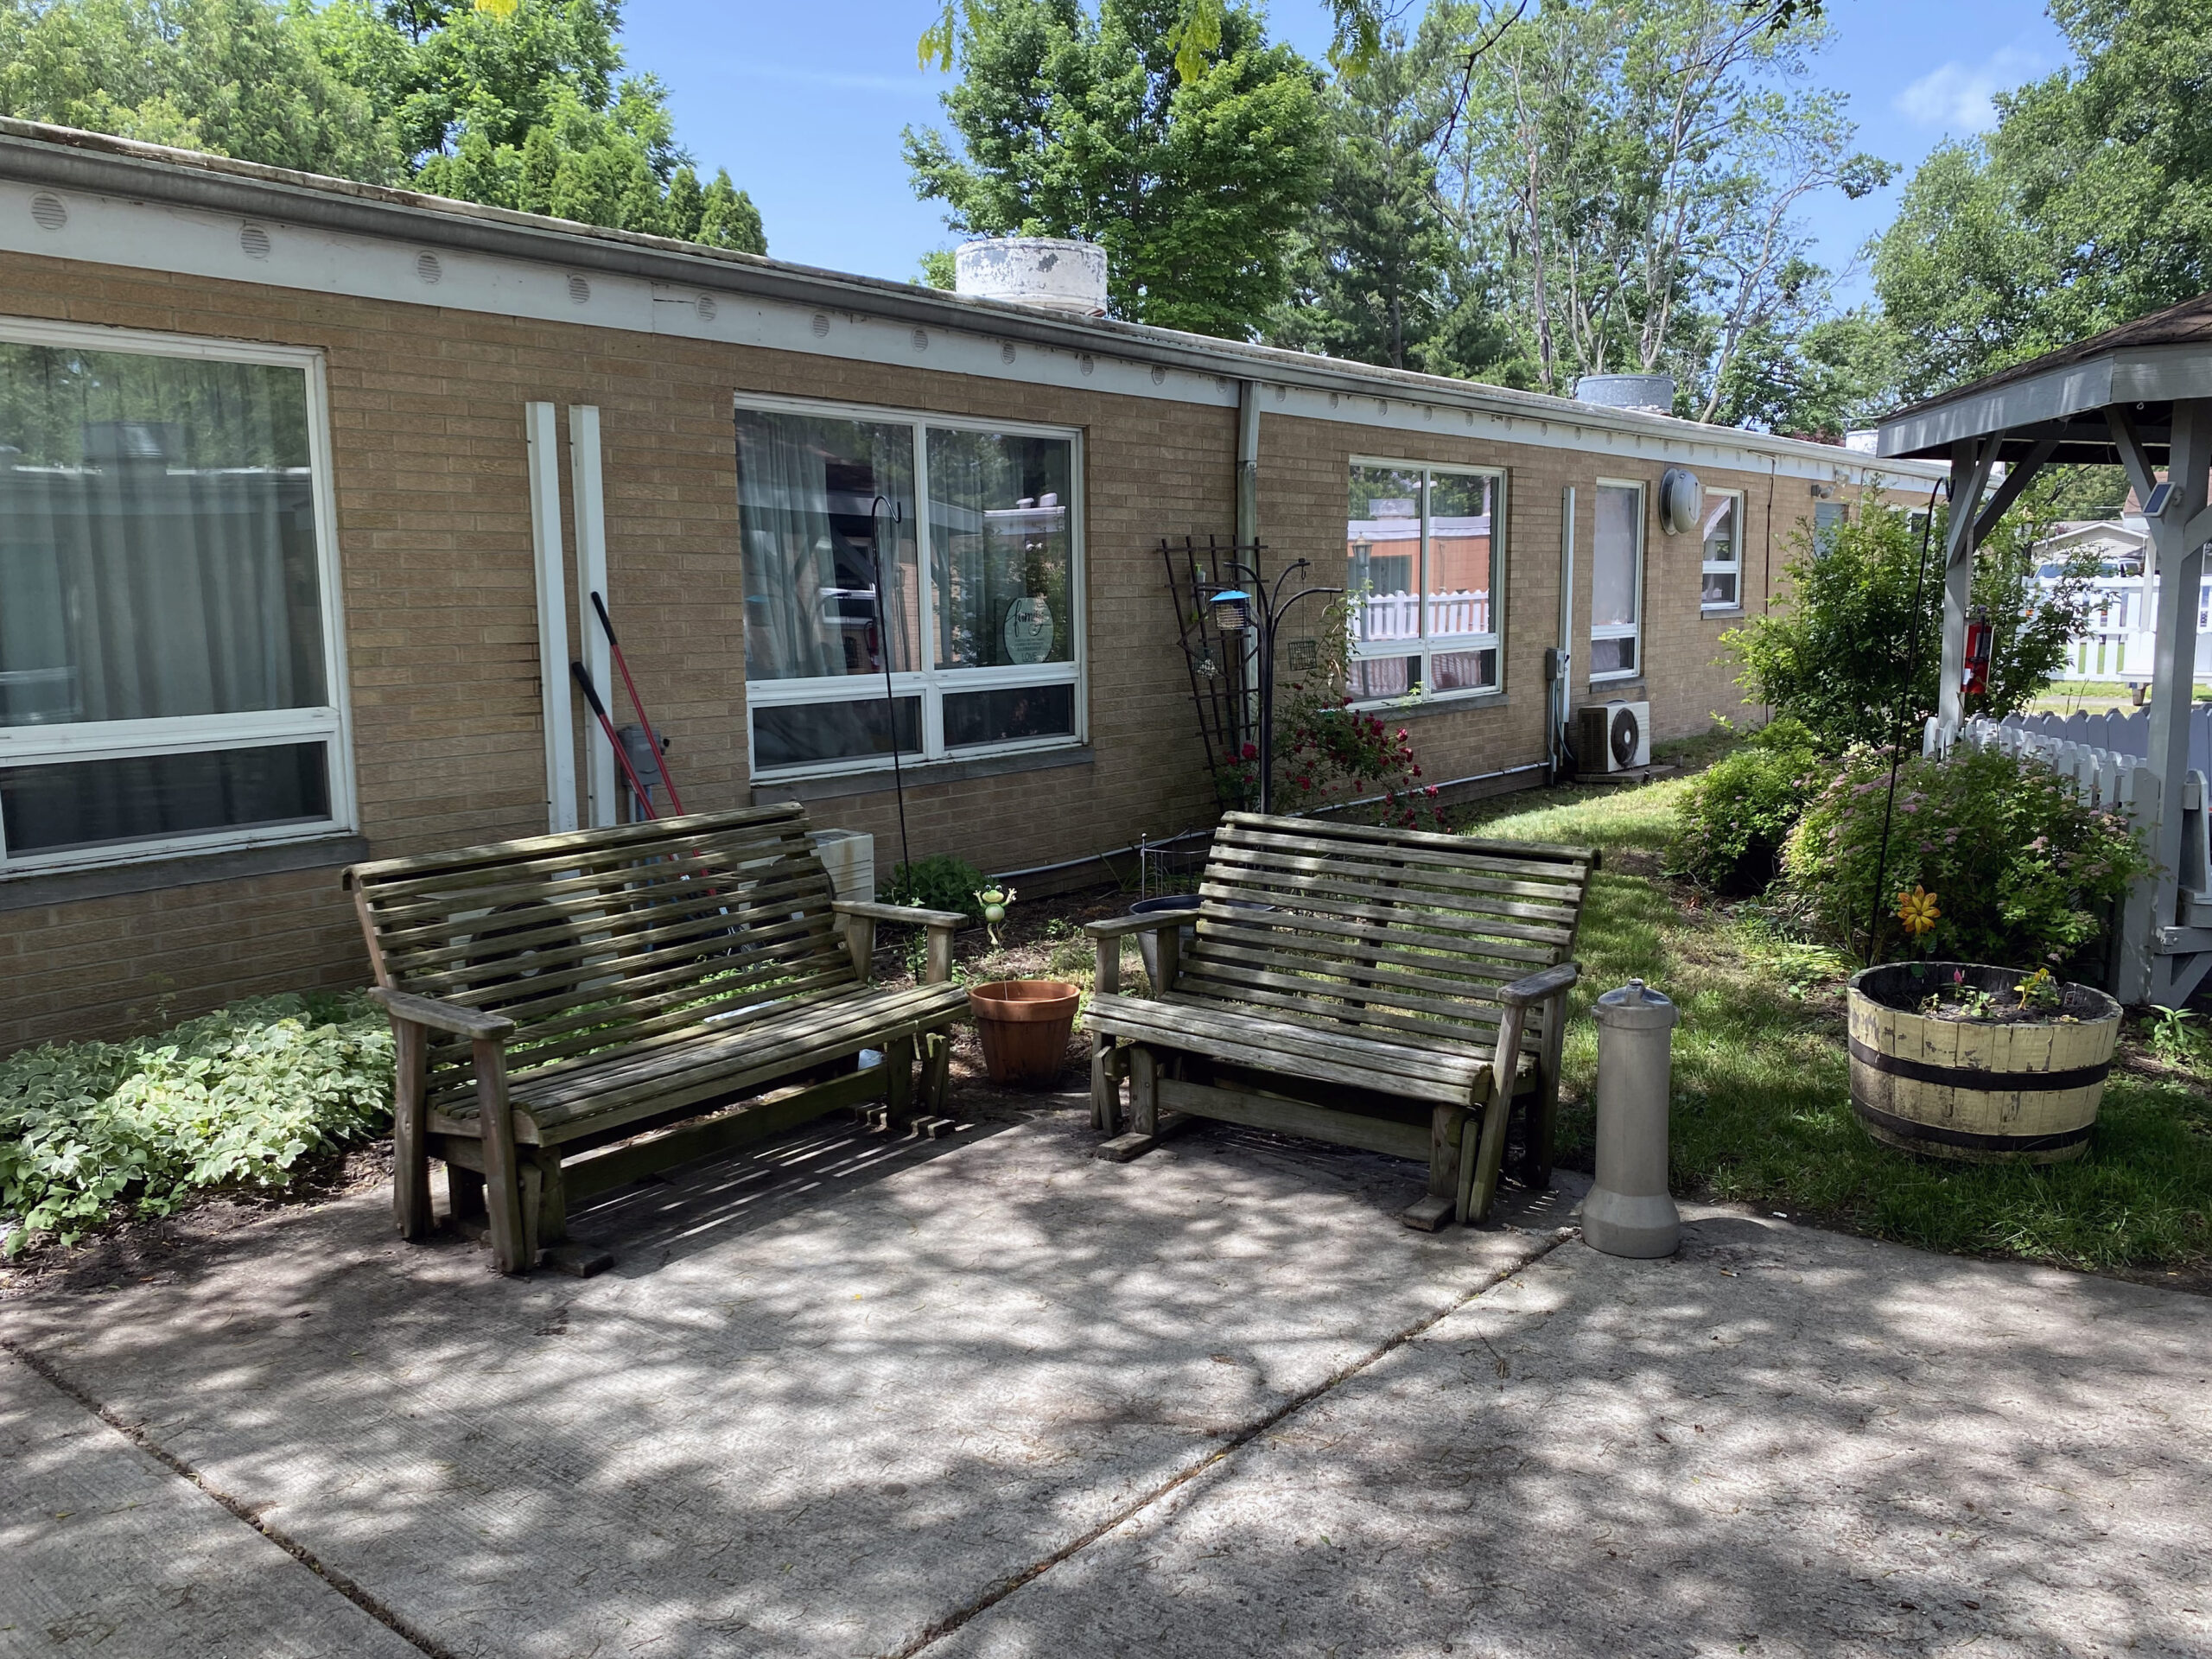 Brickyard Healthcare LaPorte Care Center exterior patio area with benches